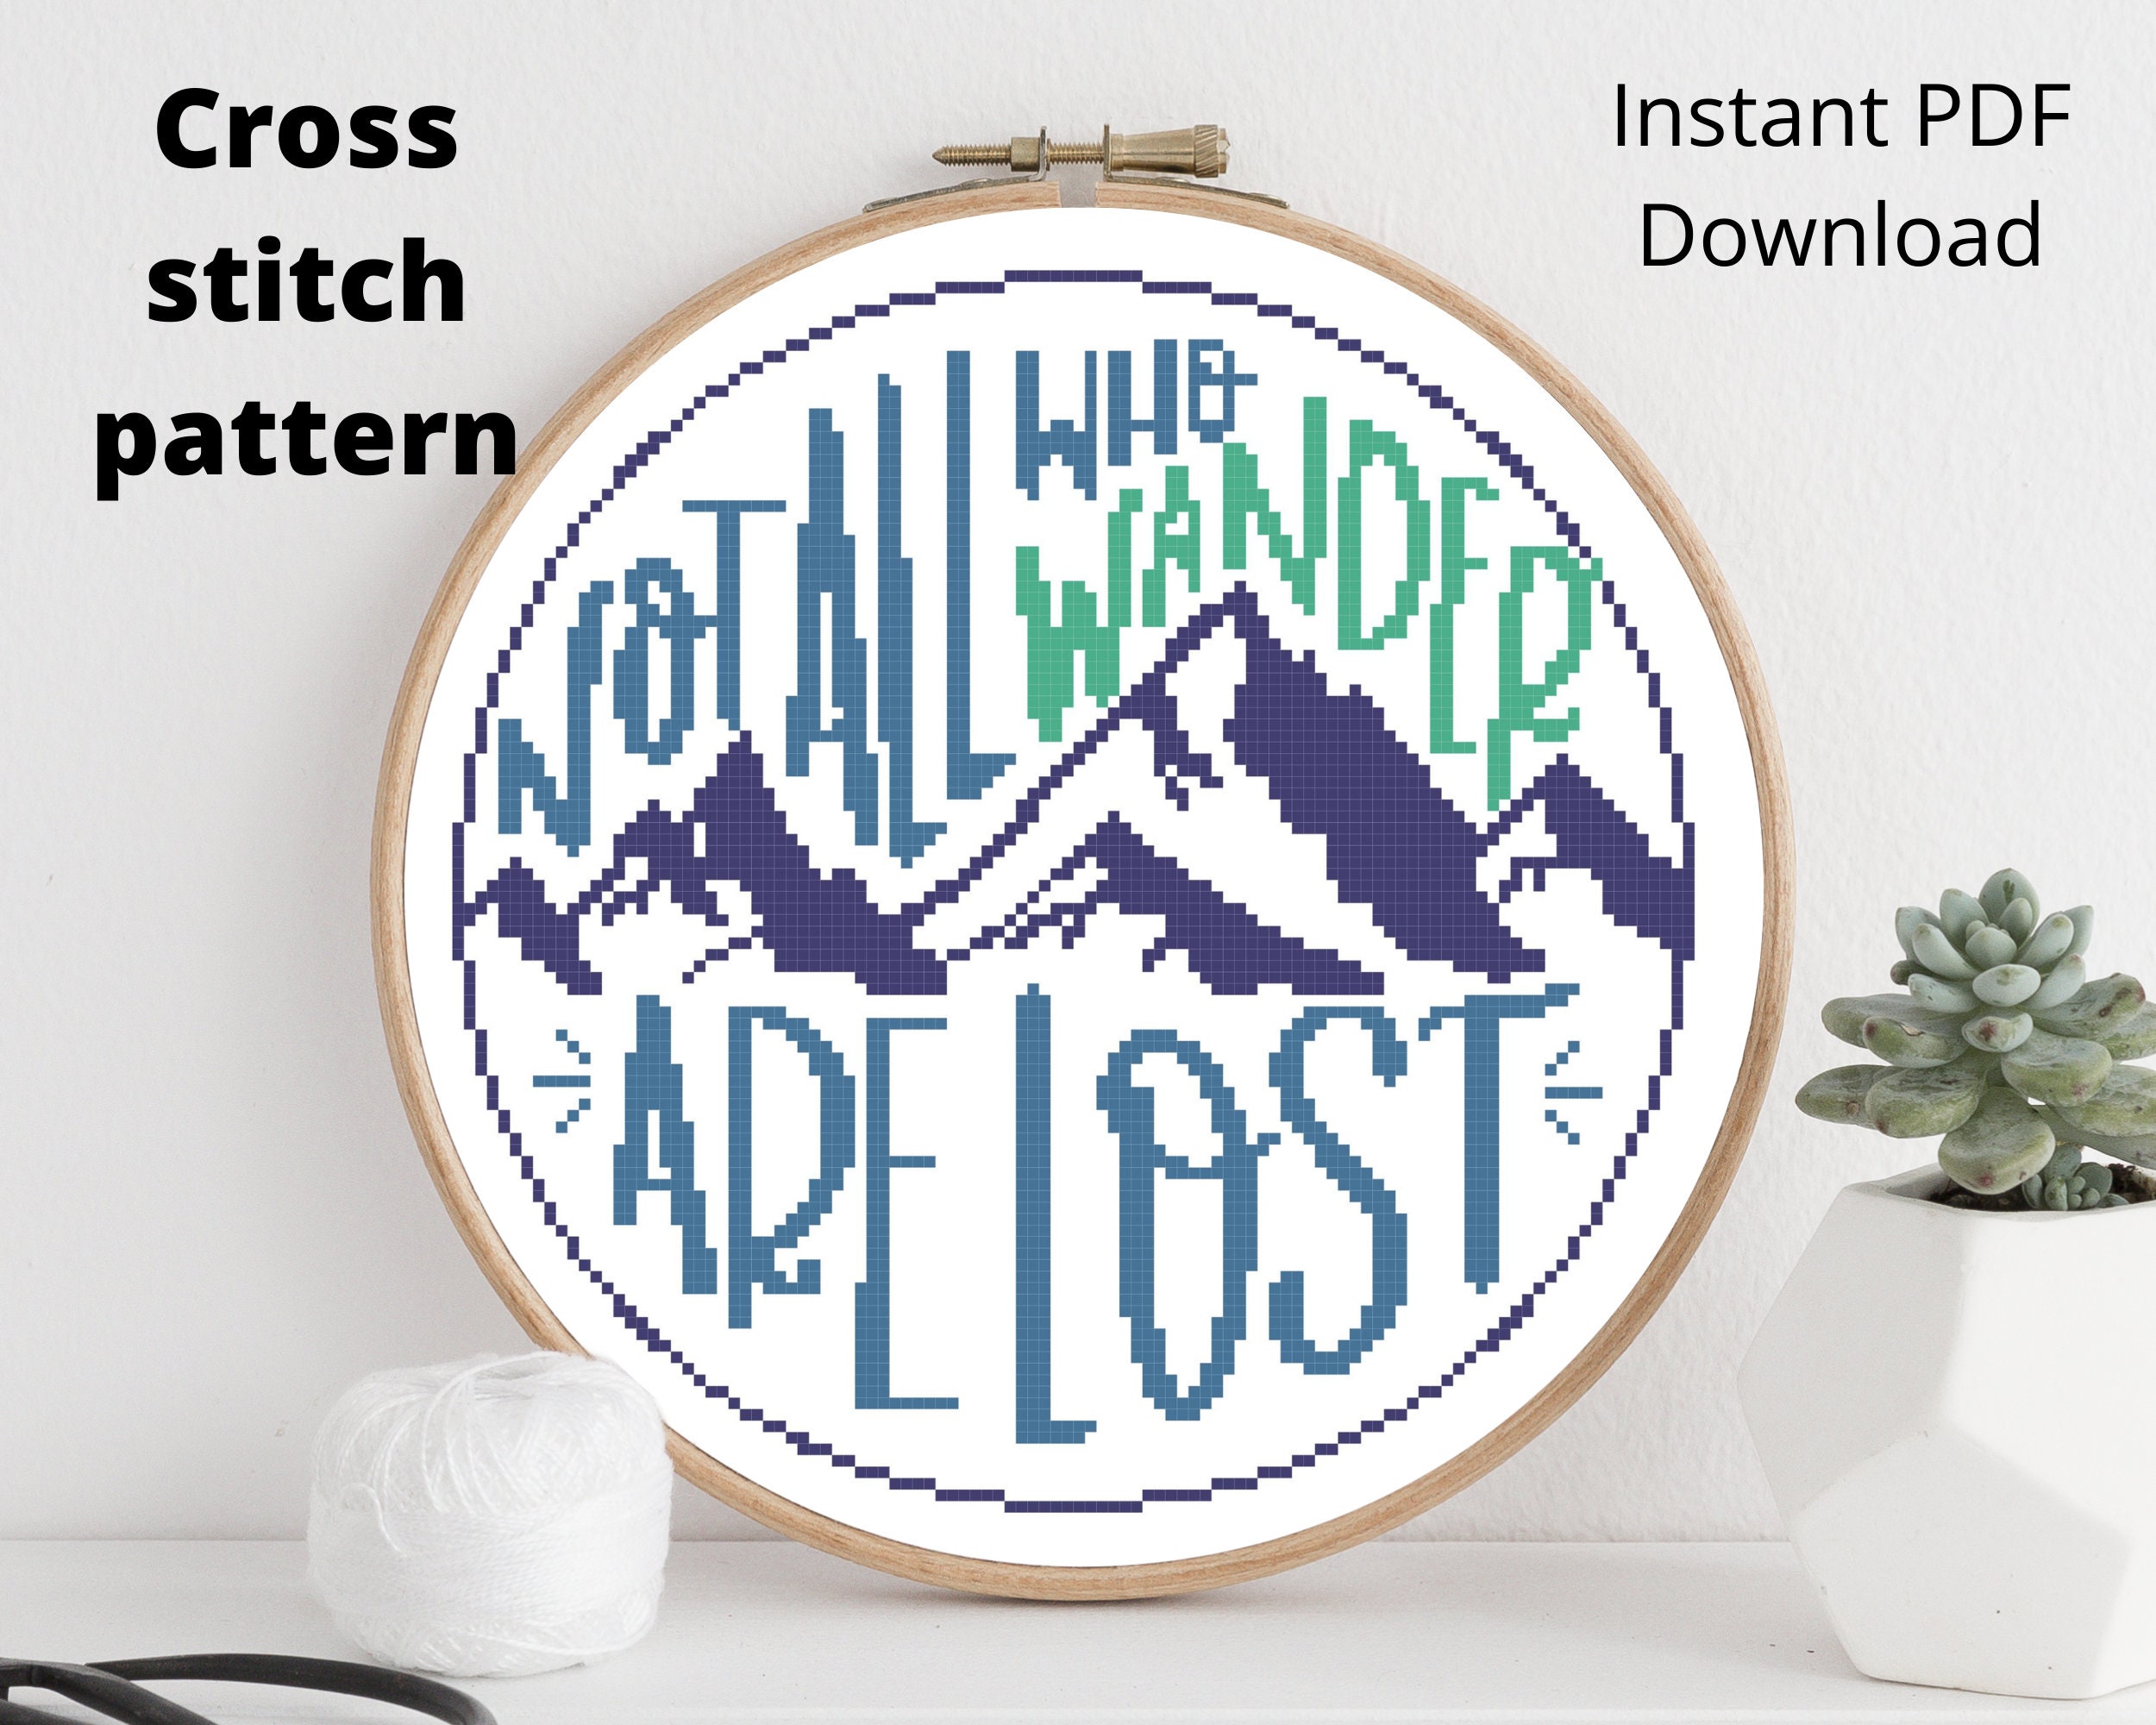 Let's Get Lost cross stitch PDF/pattern